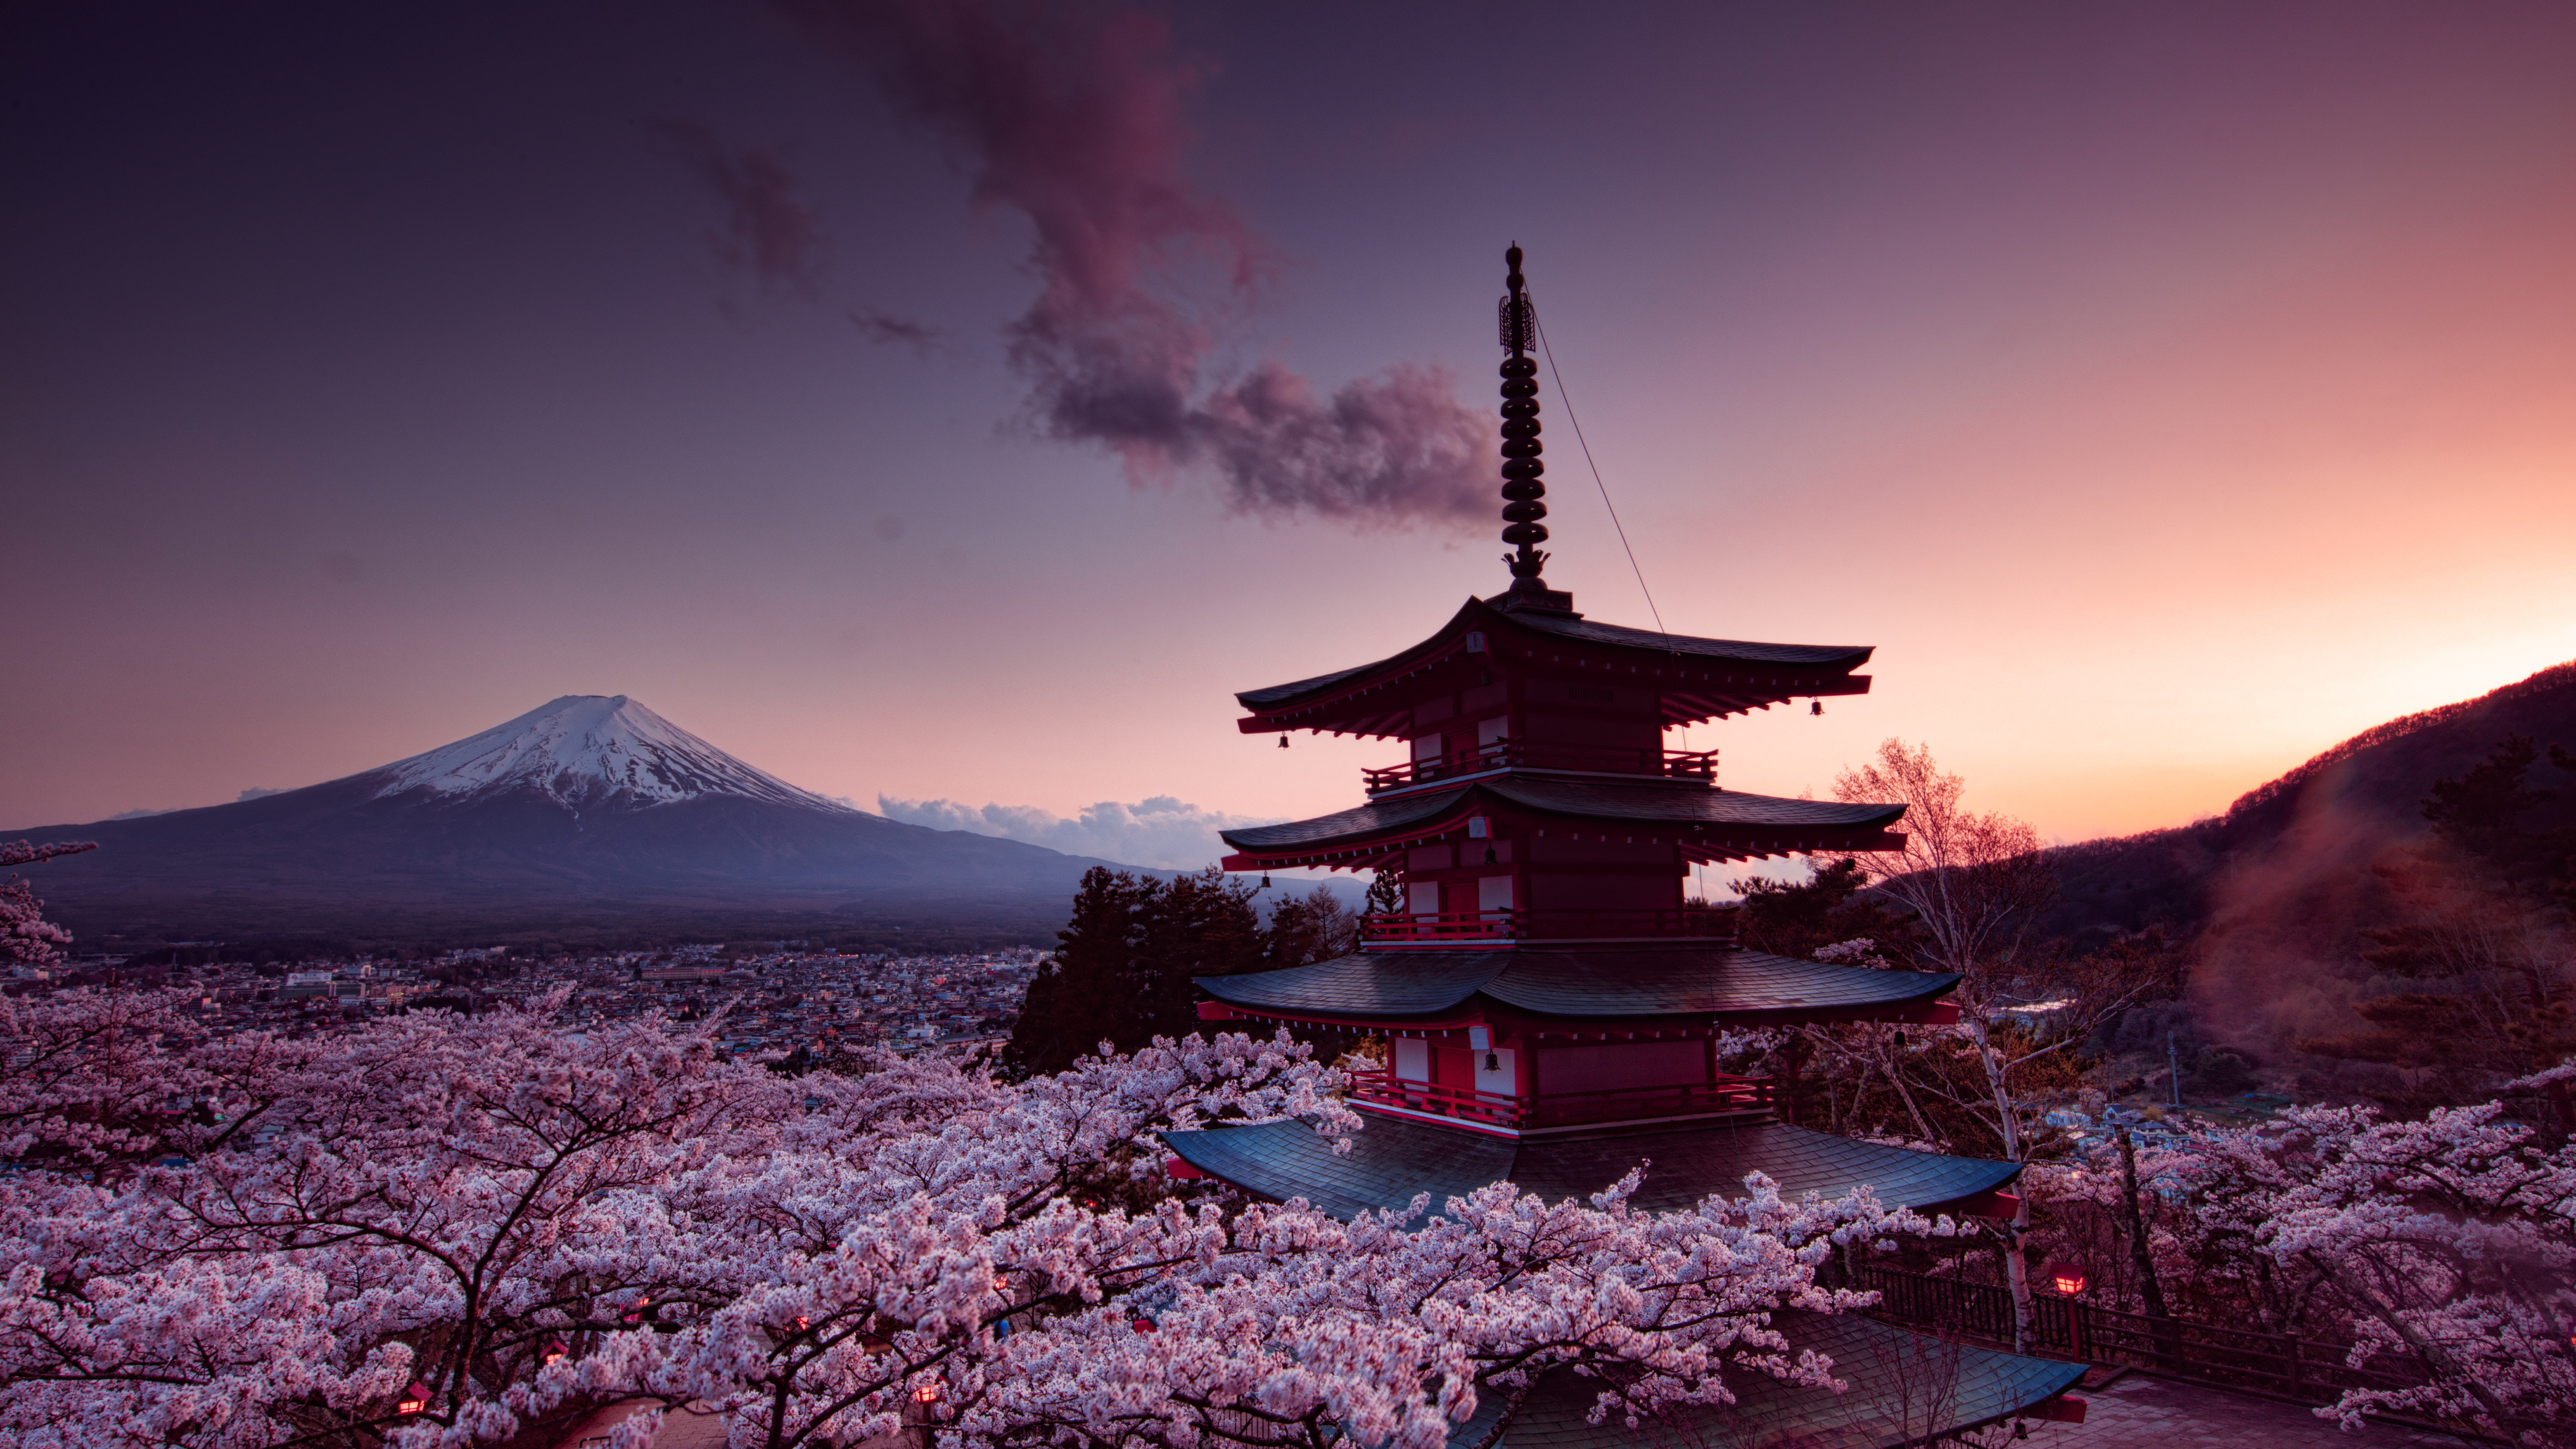 Churei Tower Mount Fuji In Japan 8k 5k HD 4k Wallpaper